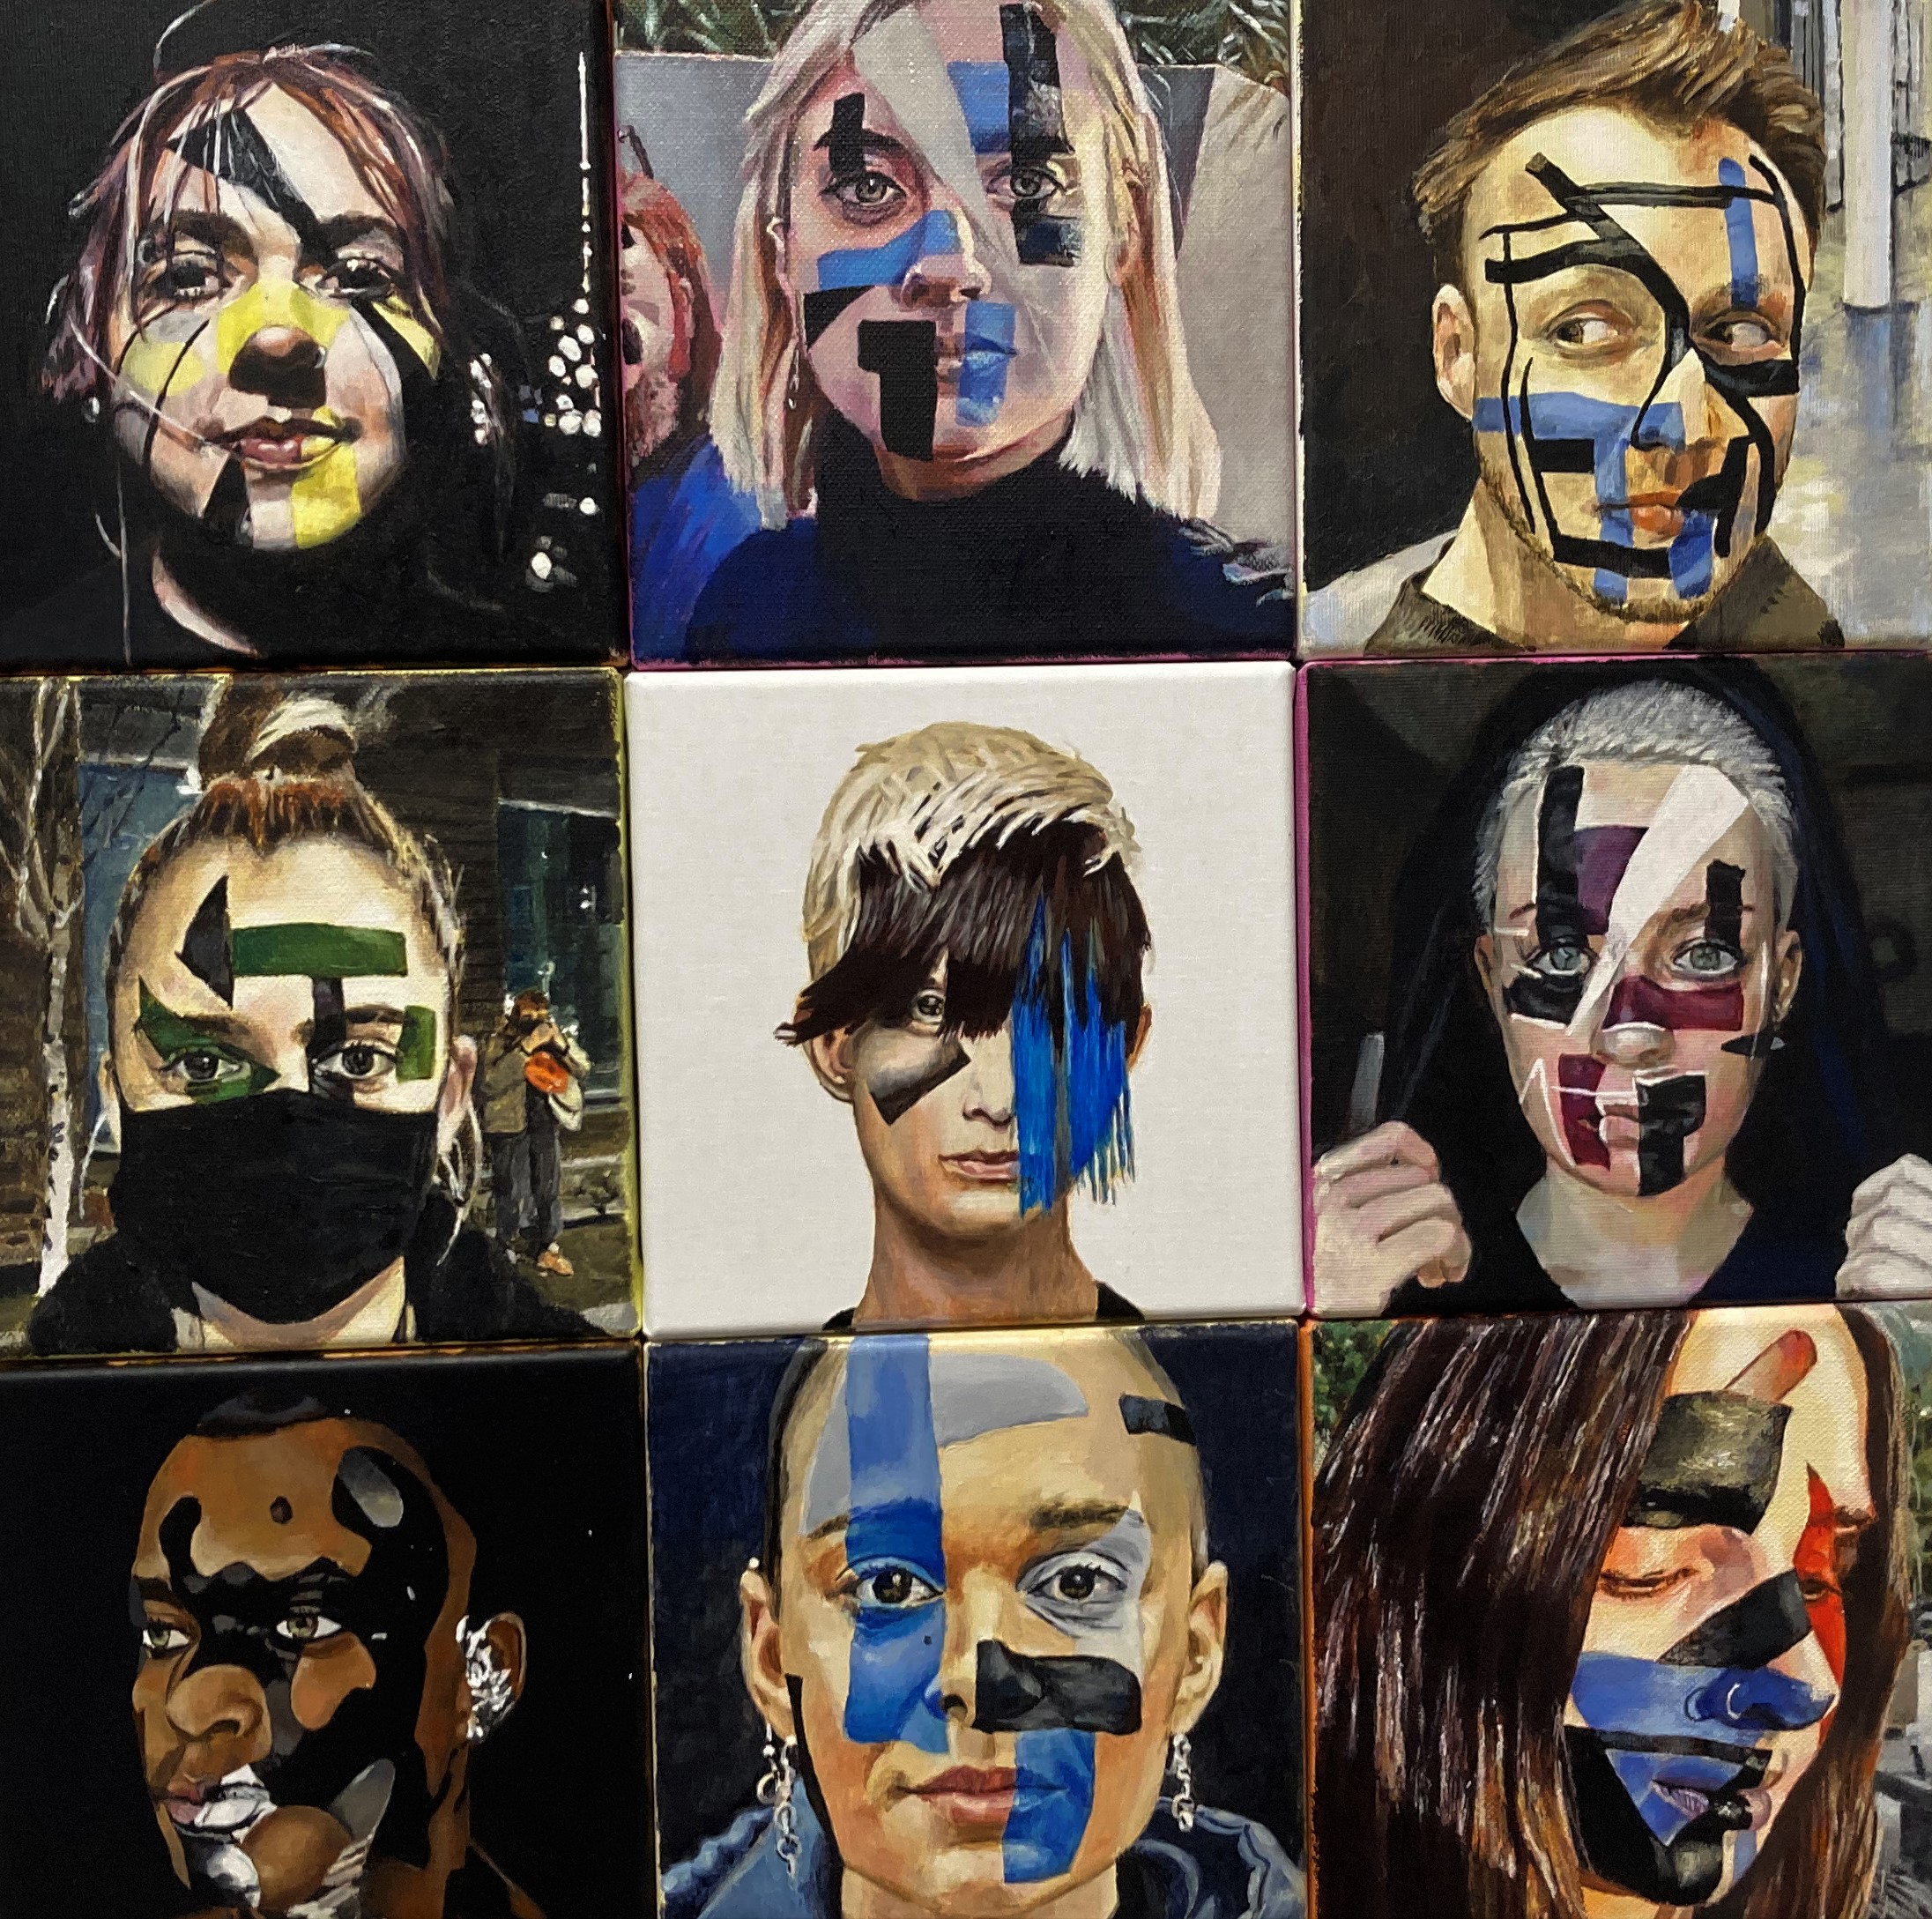 Dushko Petrovich - 2020 Screengrabs: Anti-Facial Recognition Makeup